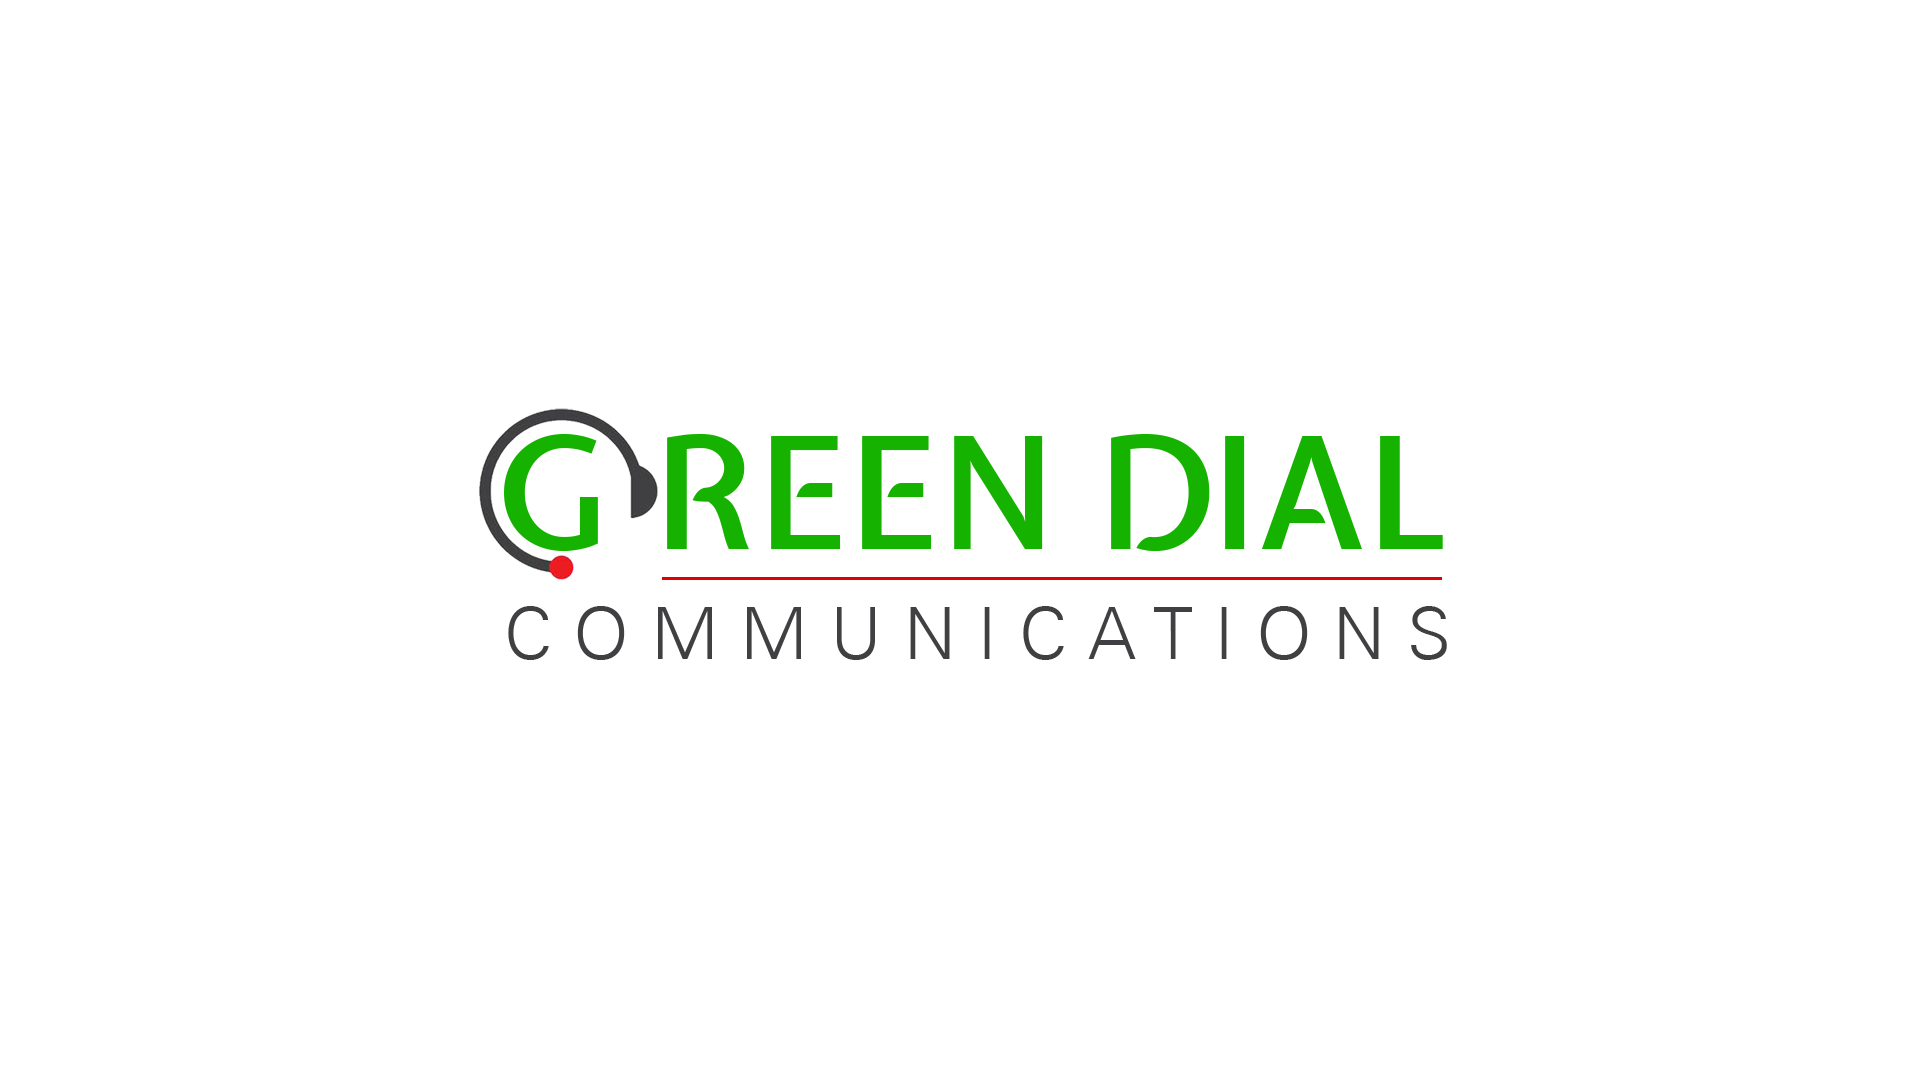 Digital Marketing Services In Tirunelveli | Green Dial